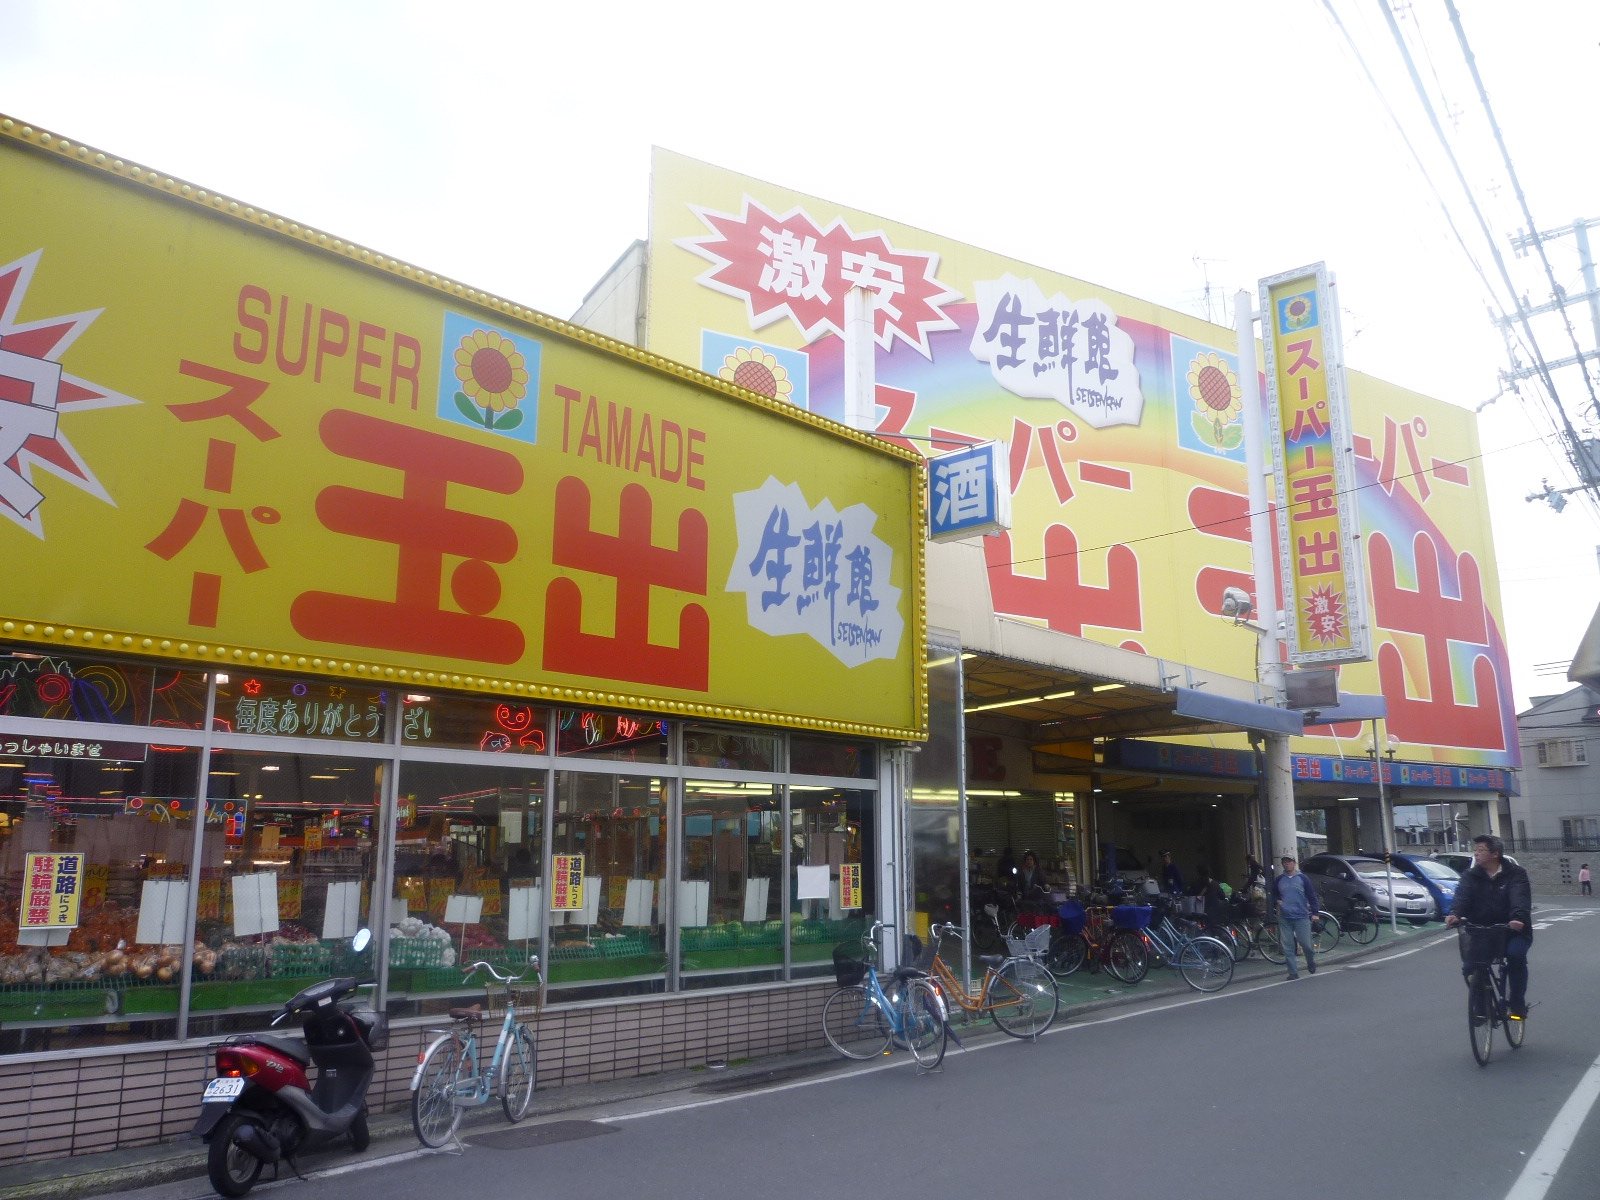 Supermarket. 505m to Super Tamade Yao store (Super)